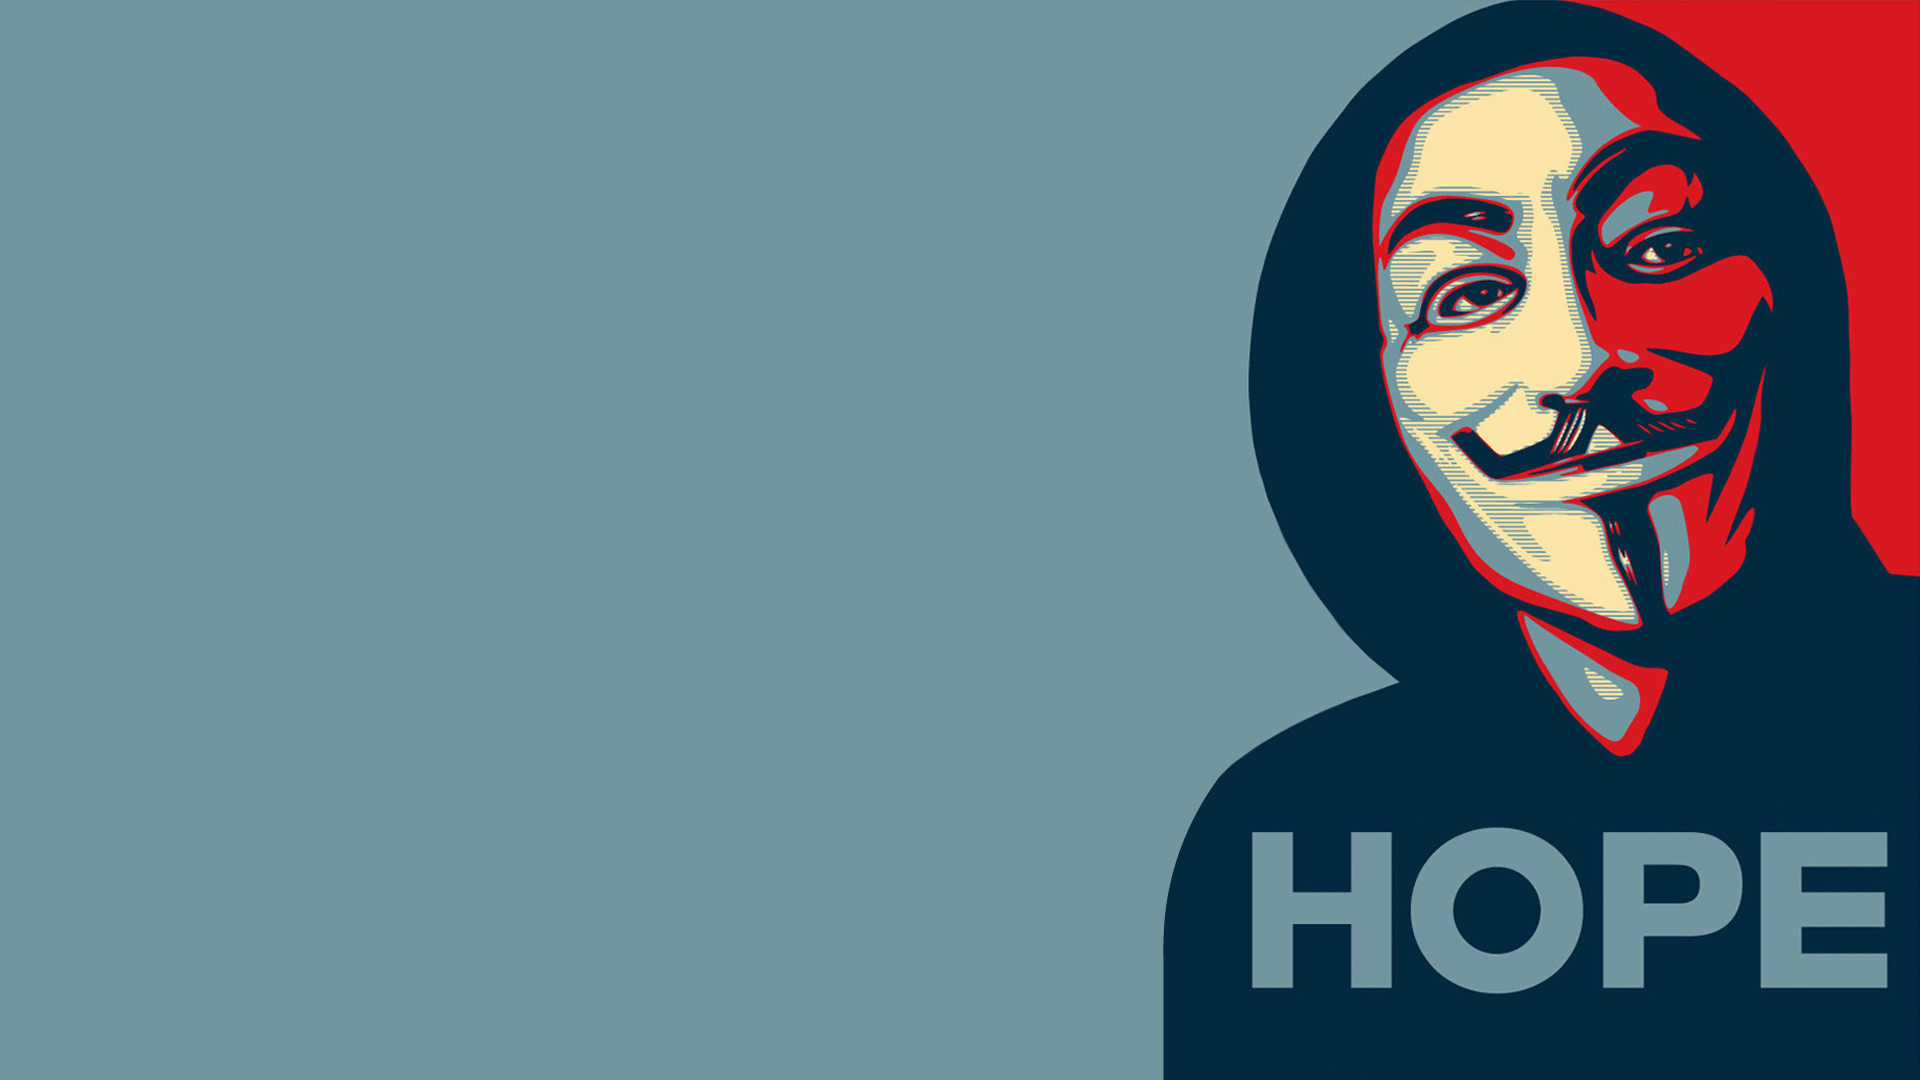 Anonymous mask style wallpaper   ForWallpapercom